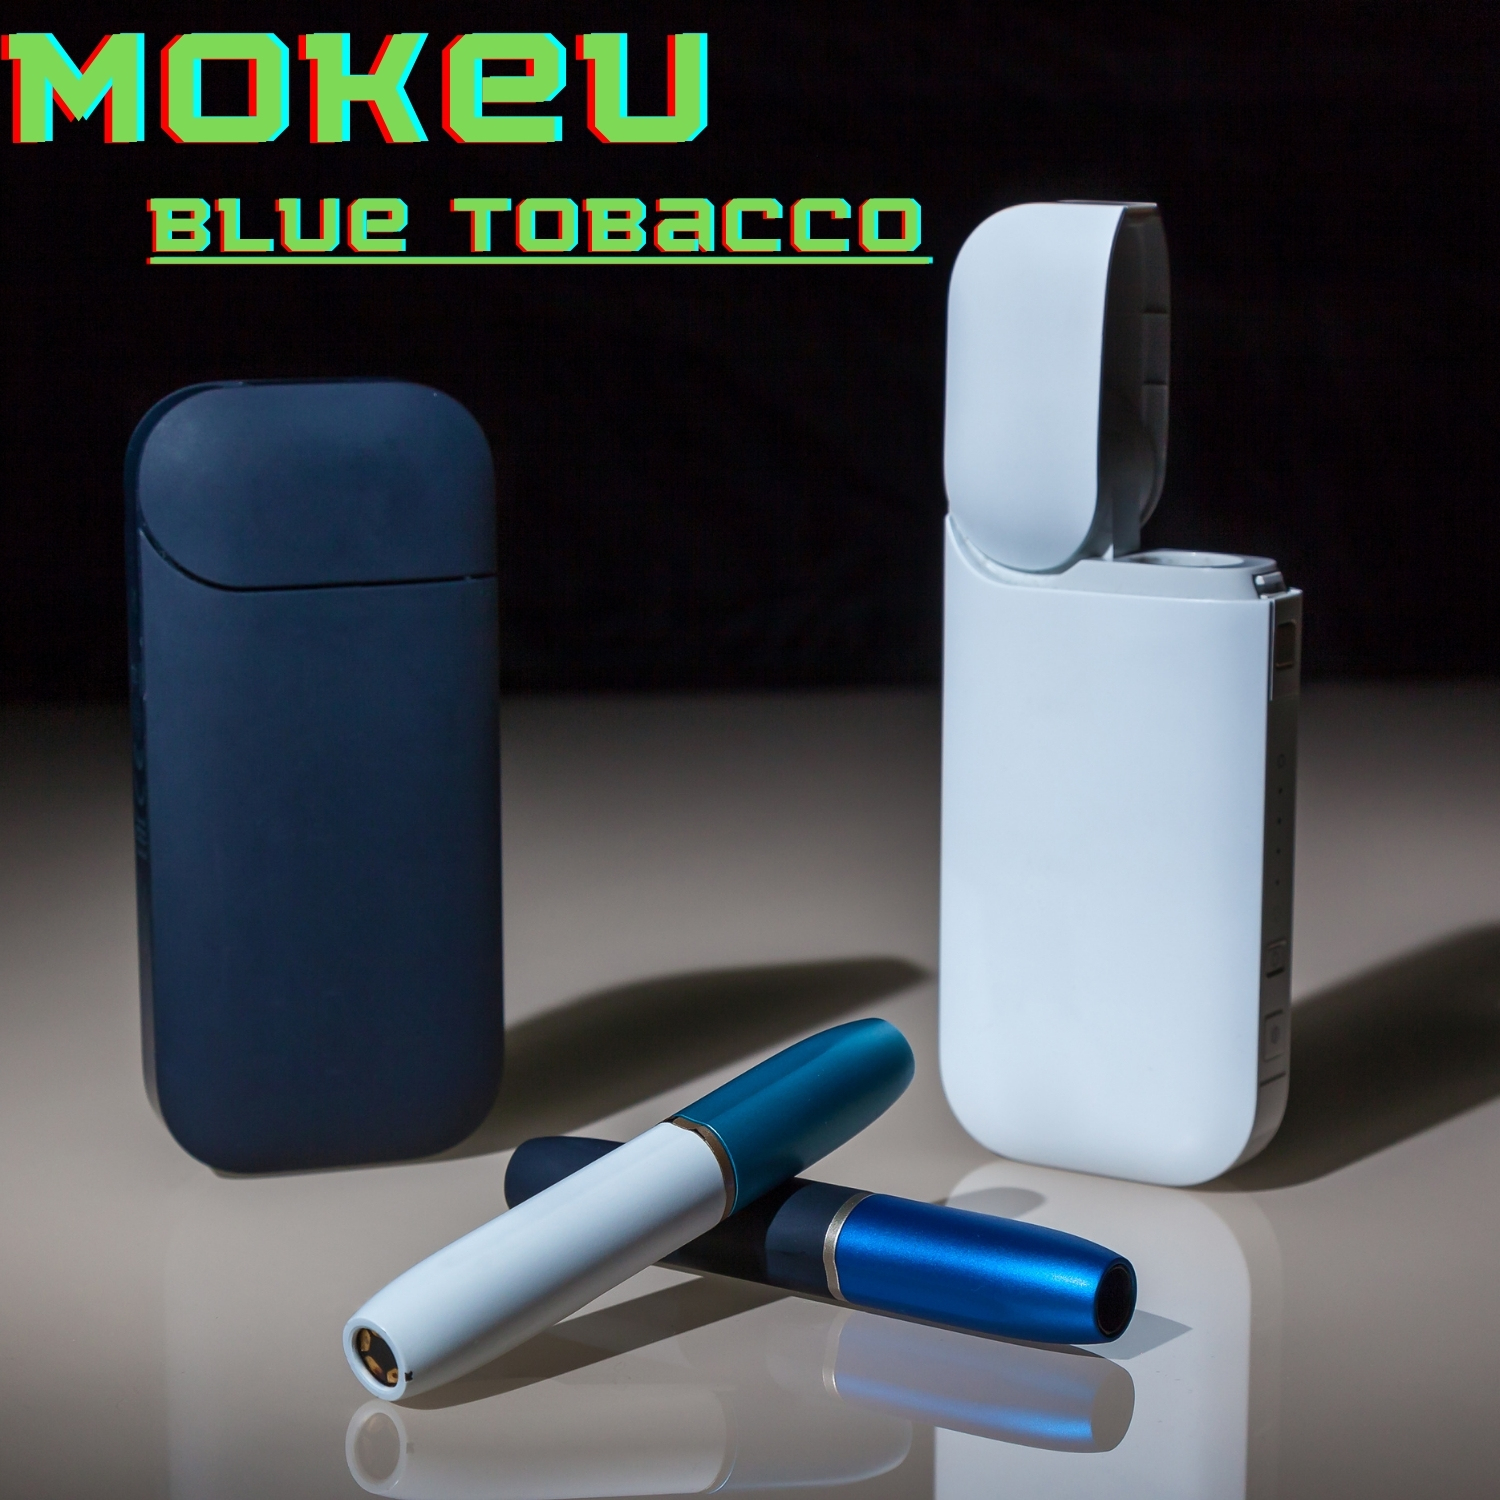 blue tobacco